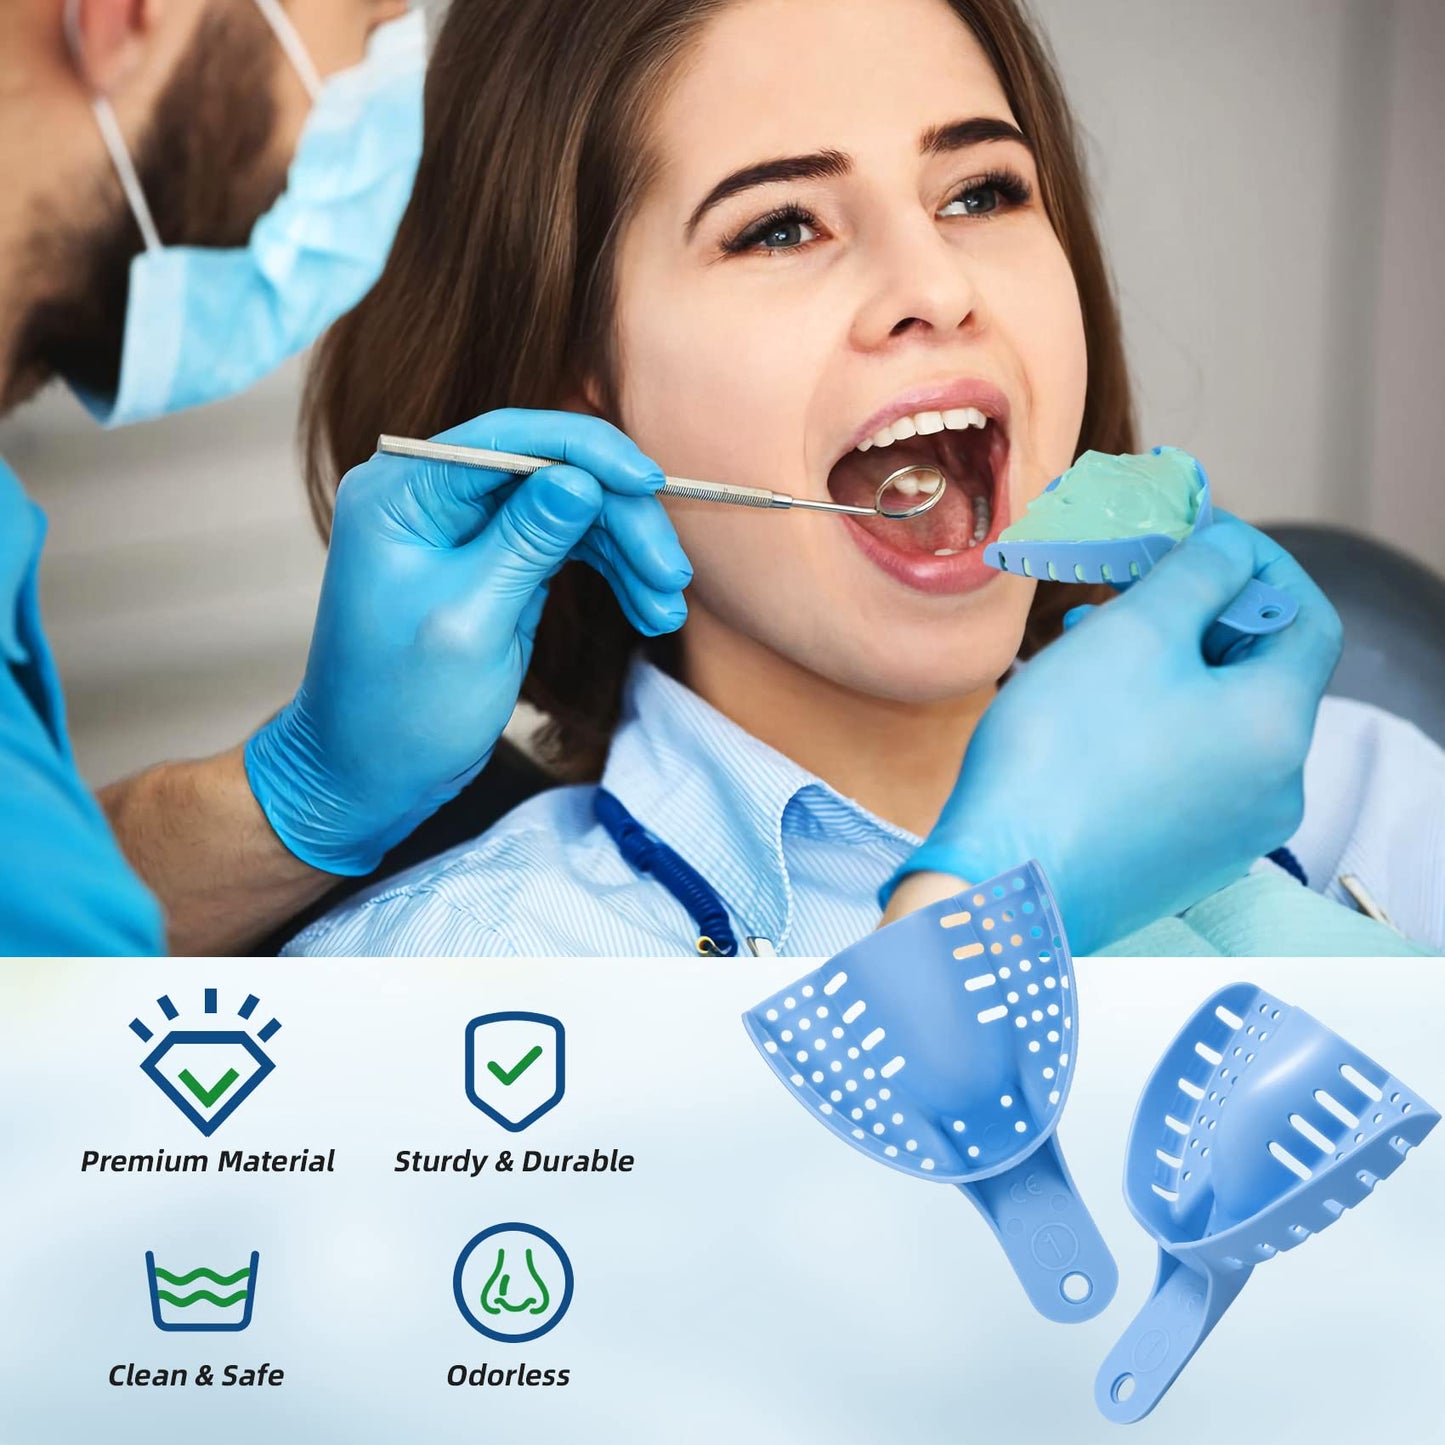 Dental Impression Trays Autoclavable 10 PCS, Perforated Impression Trays Set Plastic Teeth Holder for Dental Clinic, Lab Equipment, Dental Students